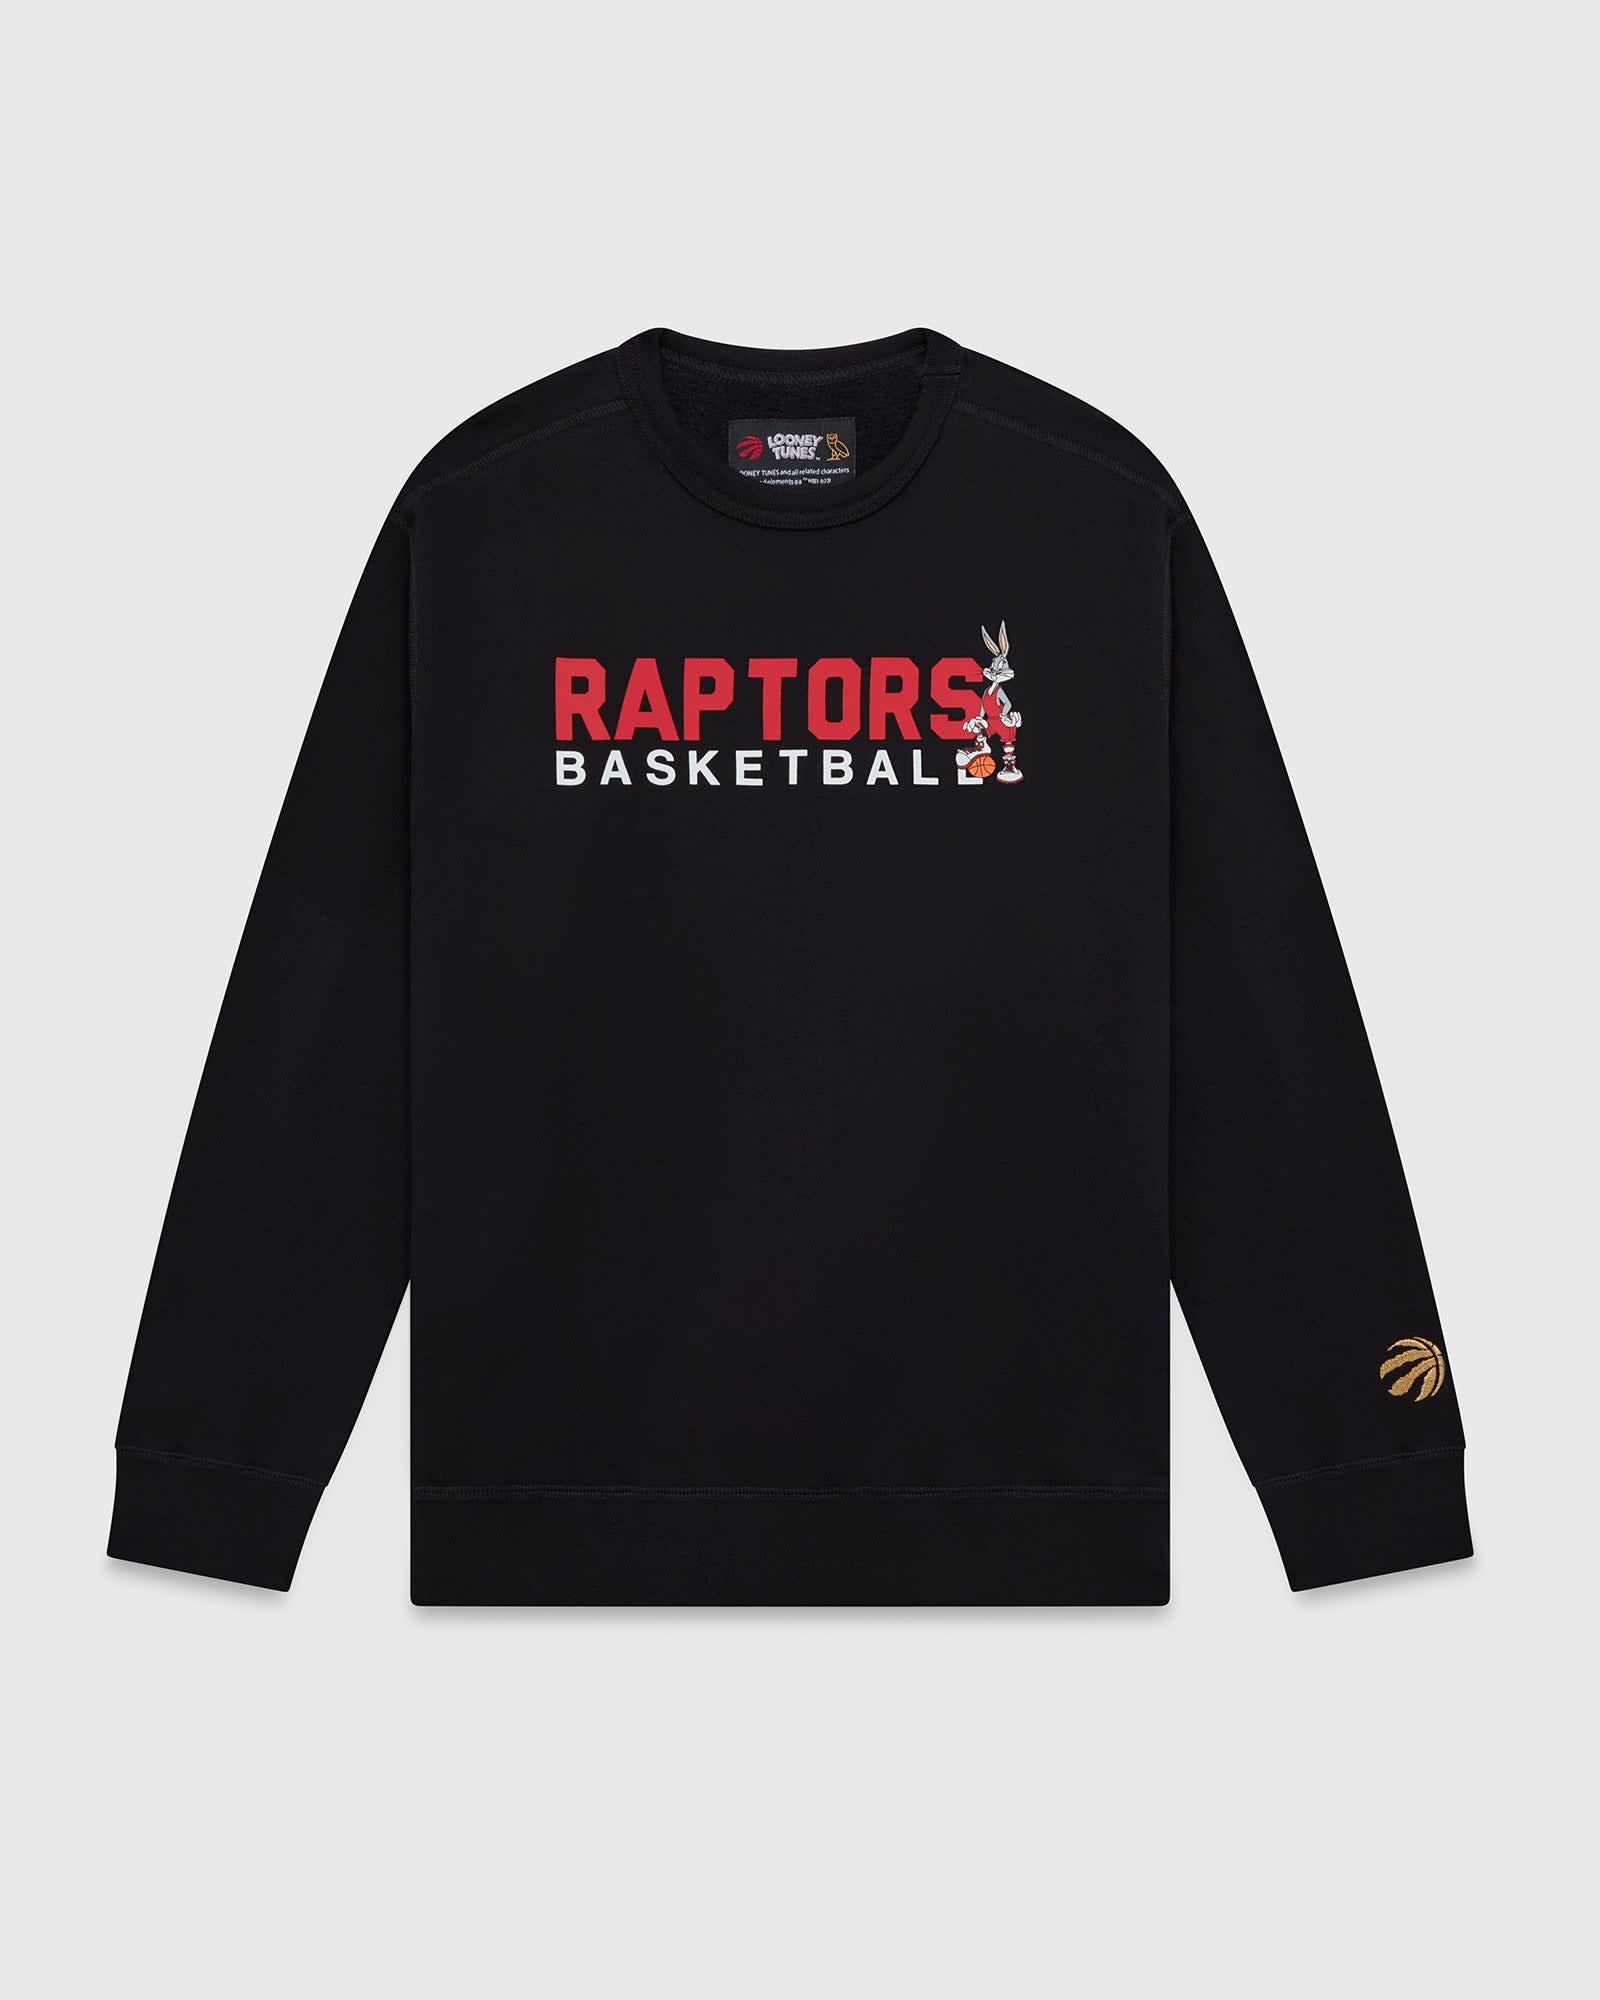 OVO X NBA Raptors Sweatshirt - Grey